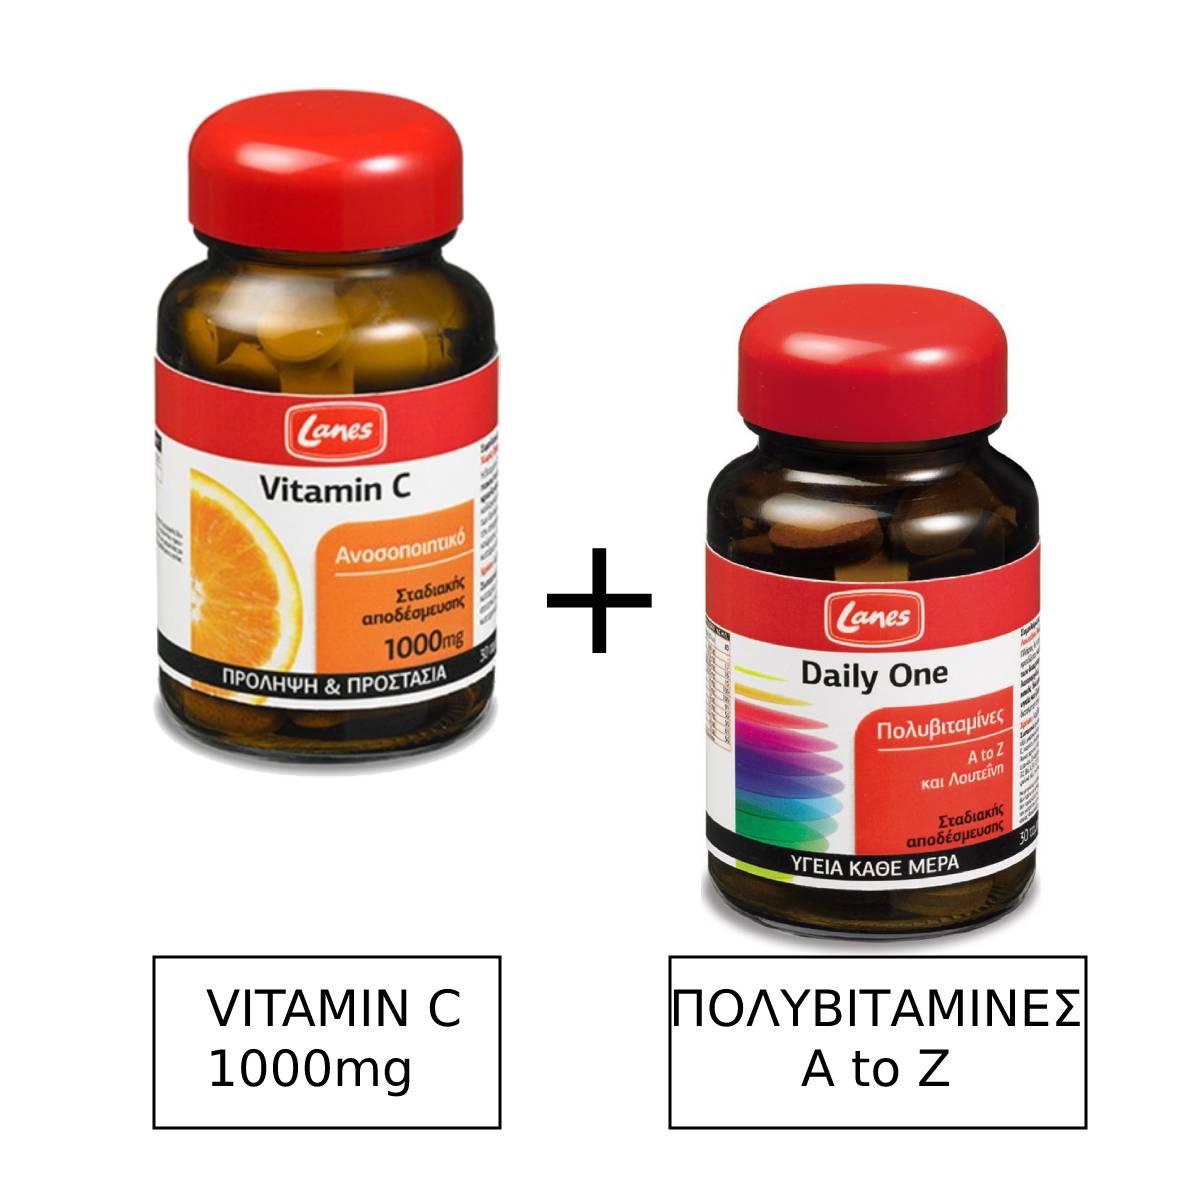 Lanes Vitamin C Συμπλήρωμα Διατροφής με Βιταμίνη C Σταδιακής Αποδέσμευσης, 1000mg 30Tabs & Lanes Daily One Πολυβιταμίνες Α – Ζ & Λουτεΐνη Σταδιακής Αποδέσμευσης, 30tabs